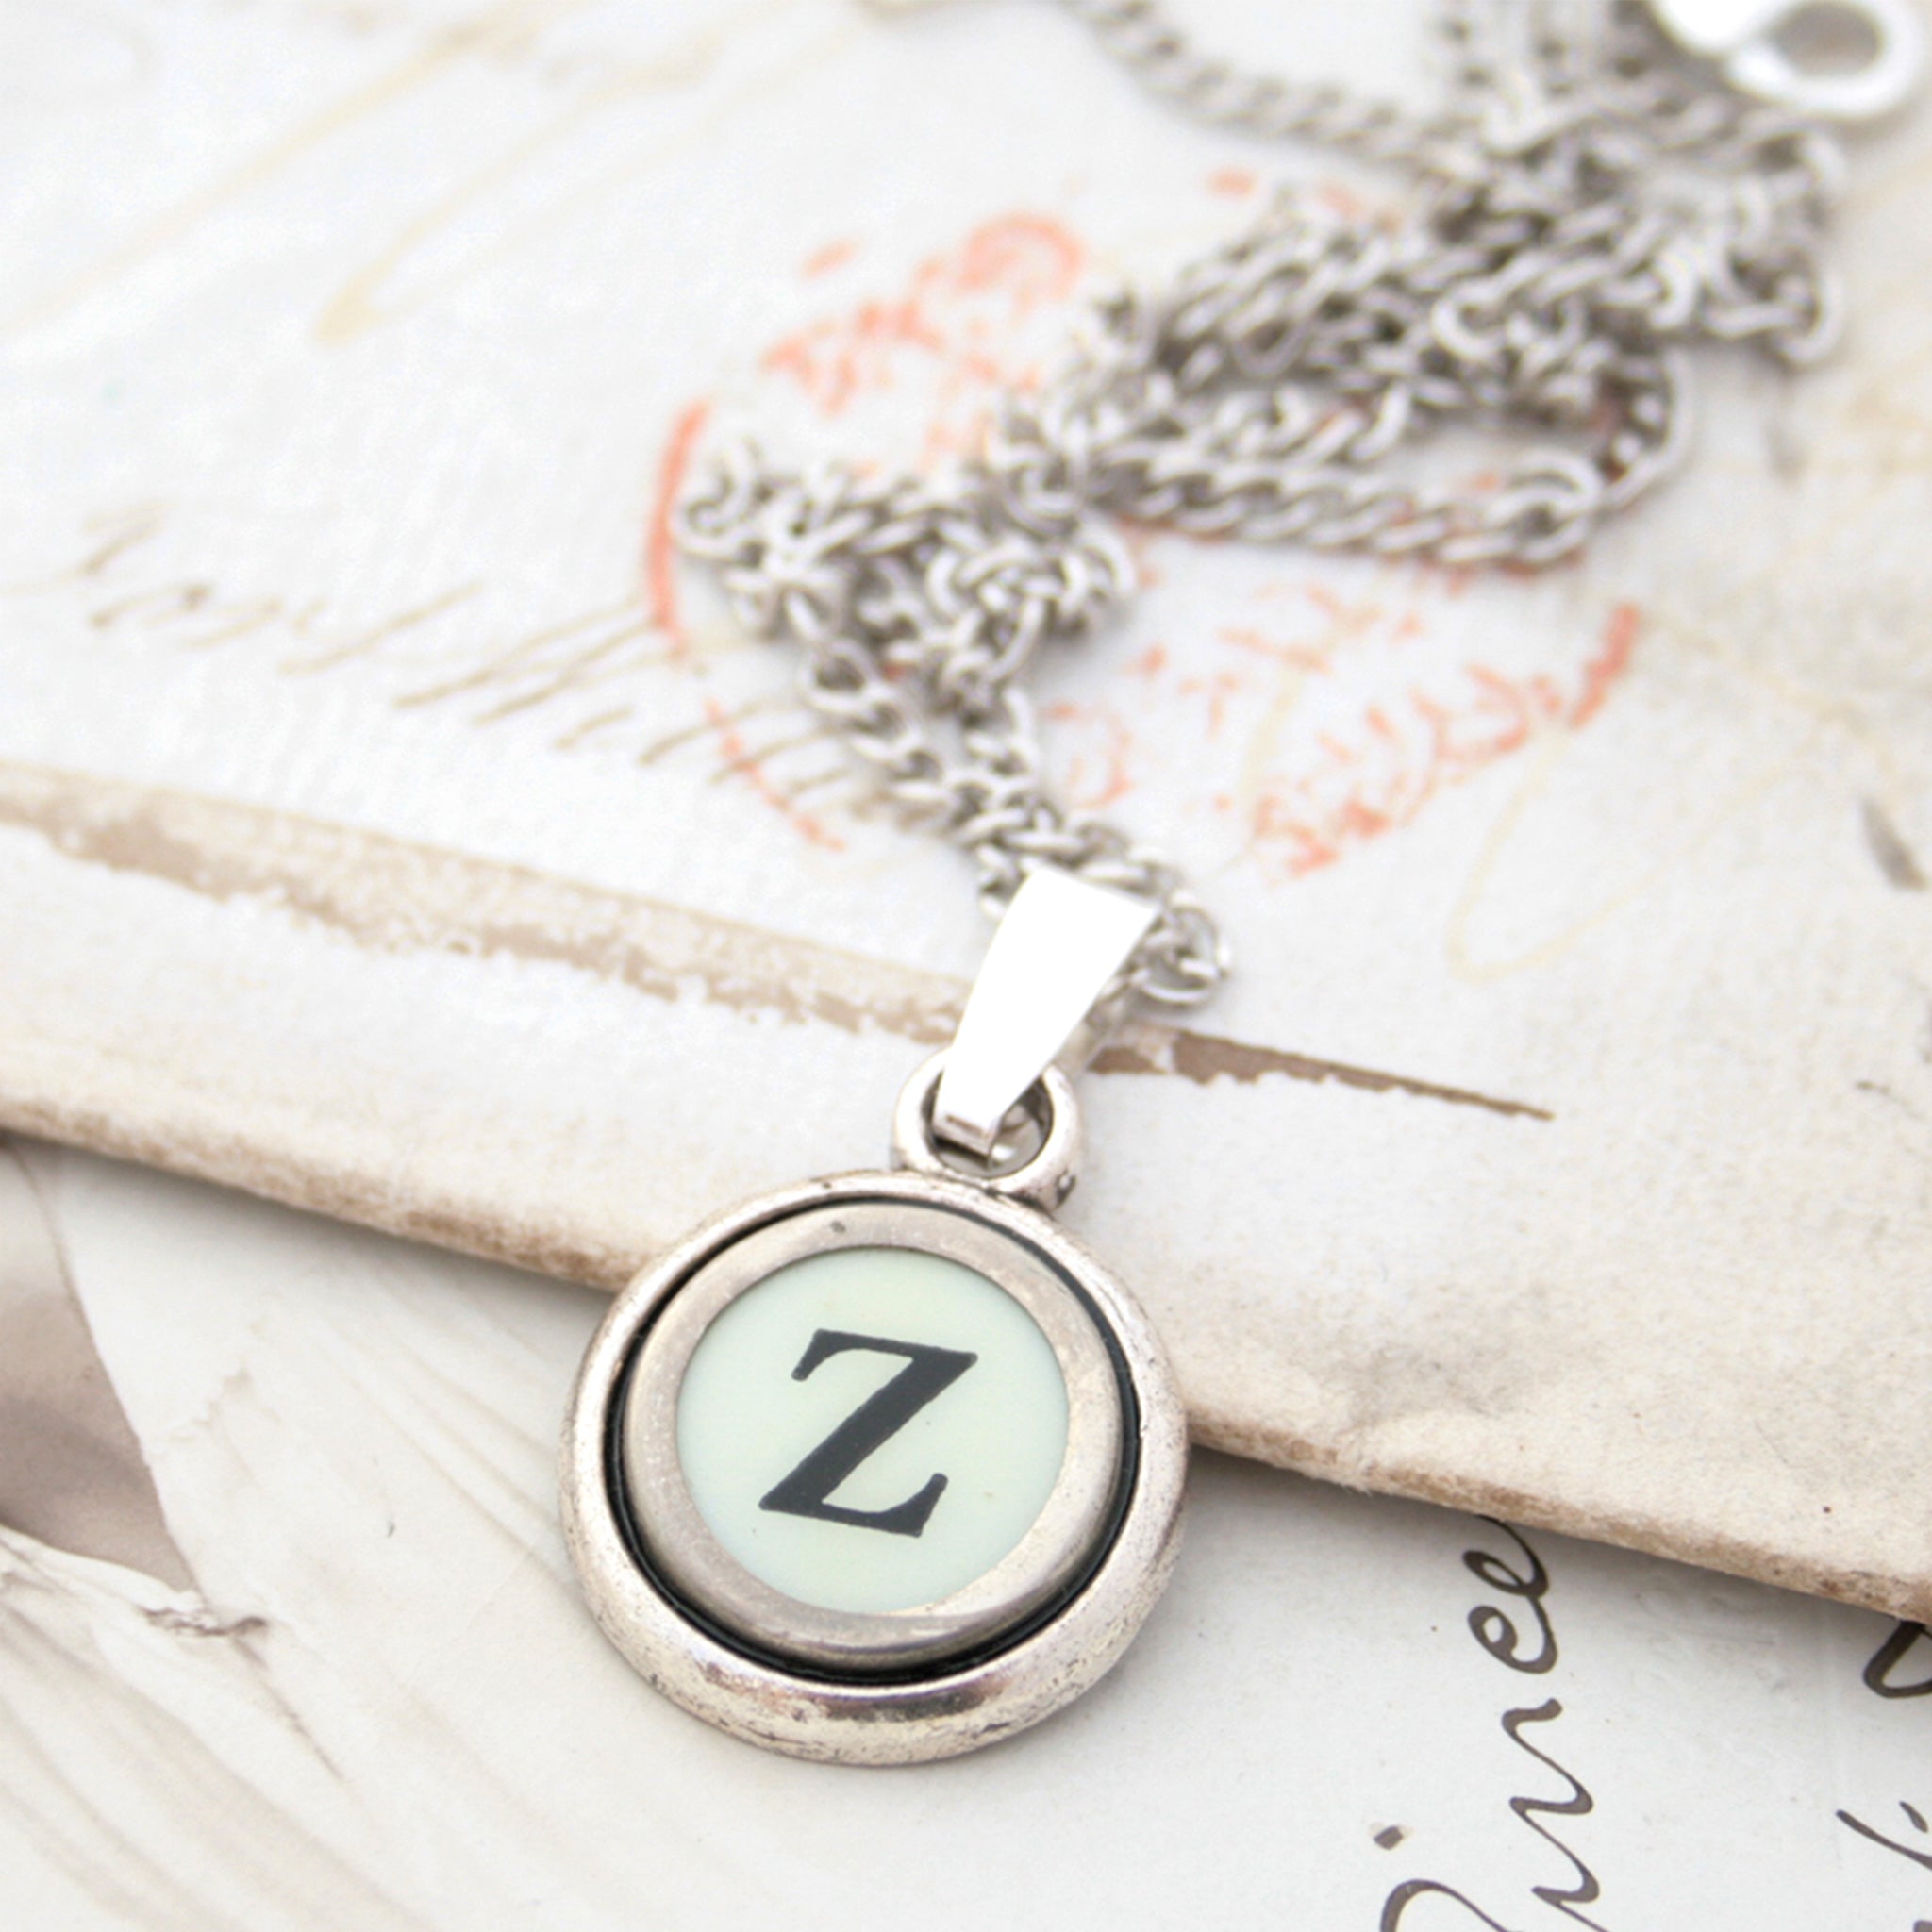 Ivory Z letter necklace made of typewriter key